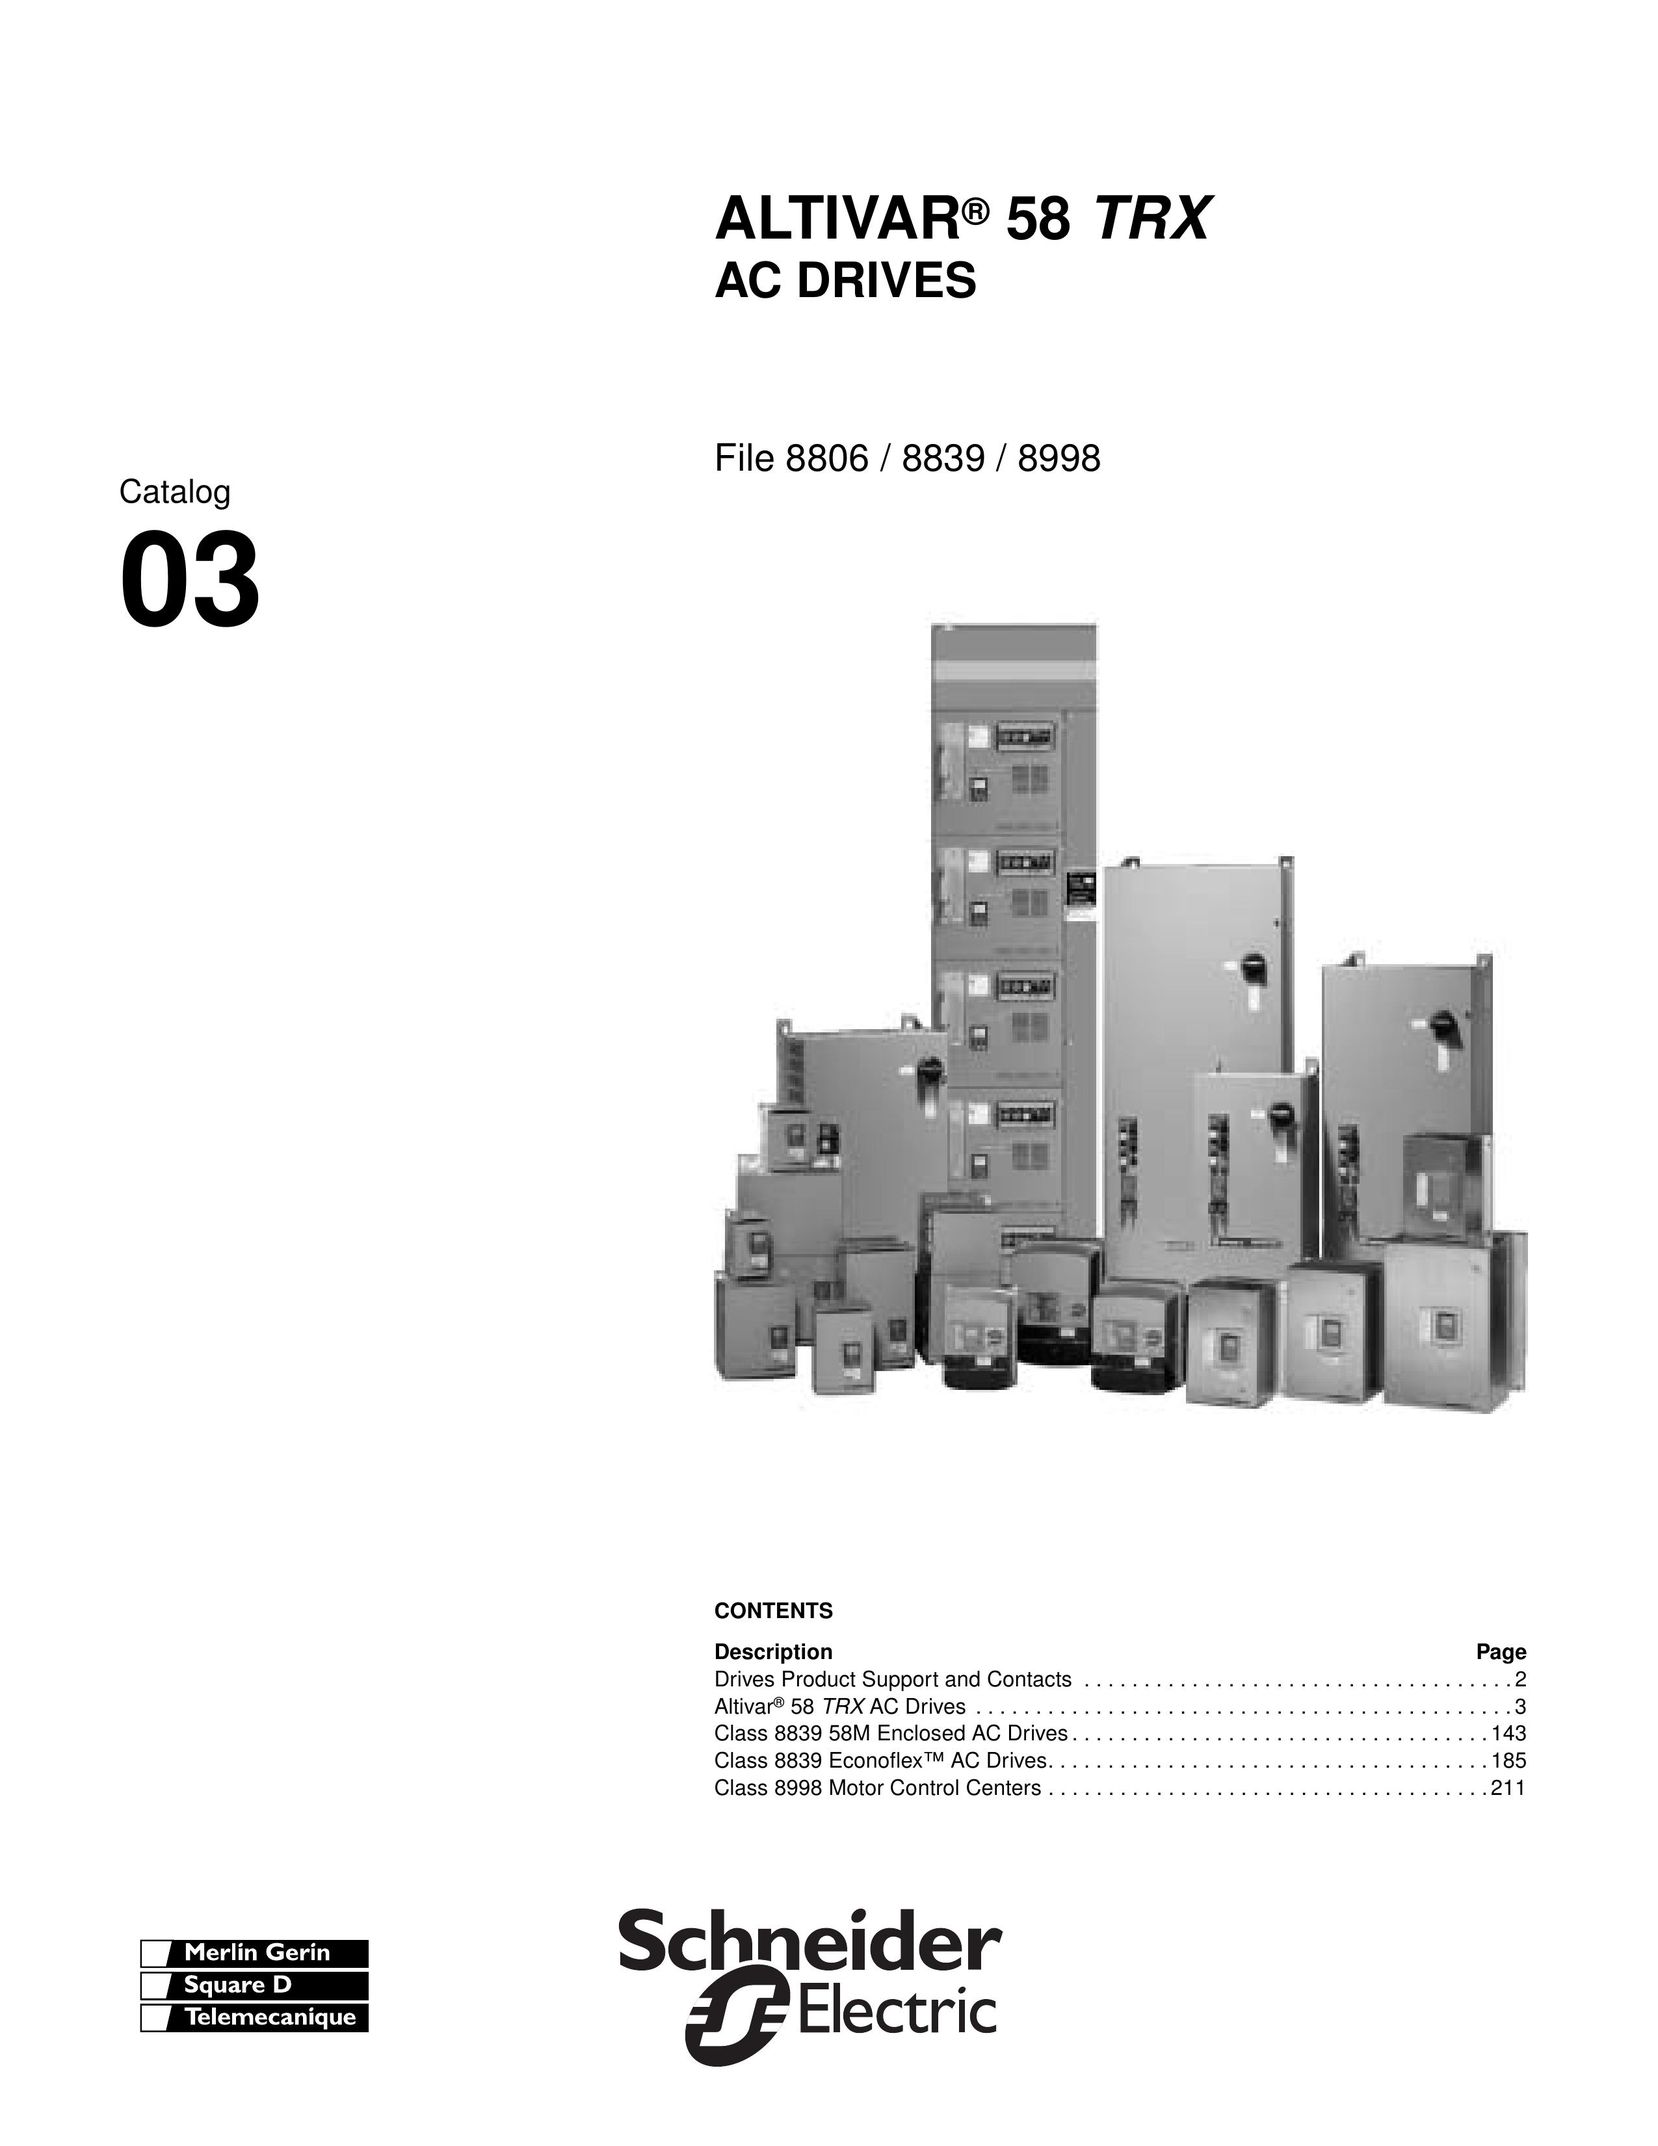 Schneider Electric 58 TRX Computer Drive User Manual